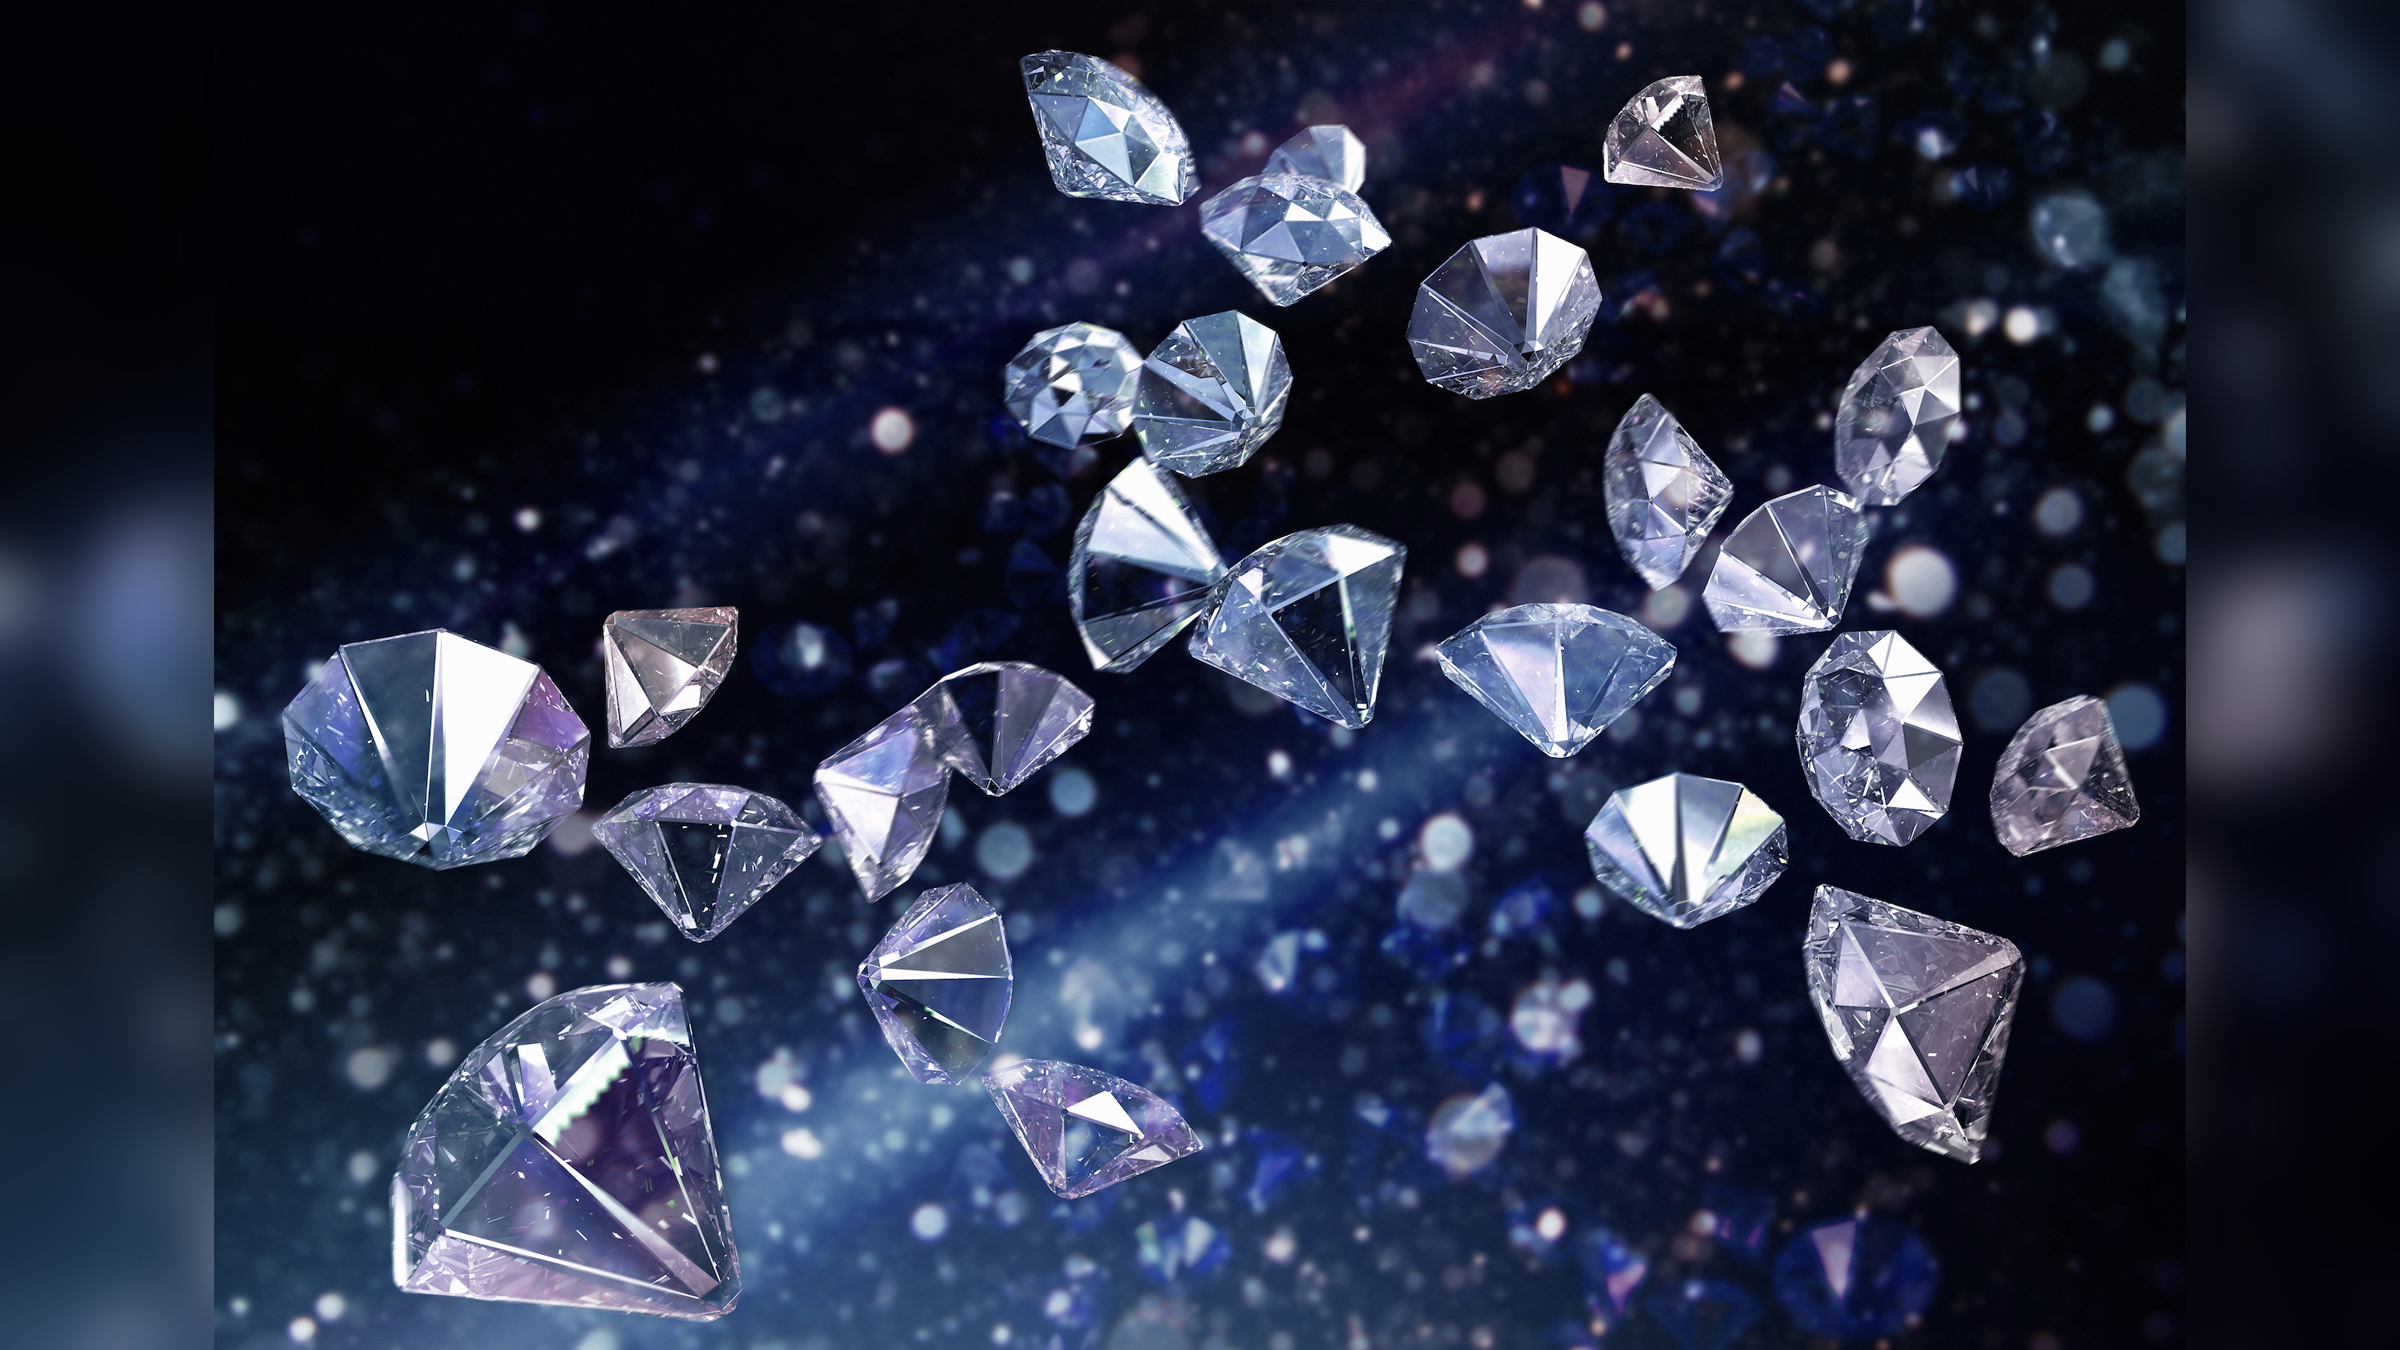 Queen Of Diamonds-Crystal Diamond Painting